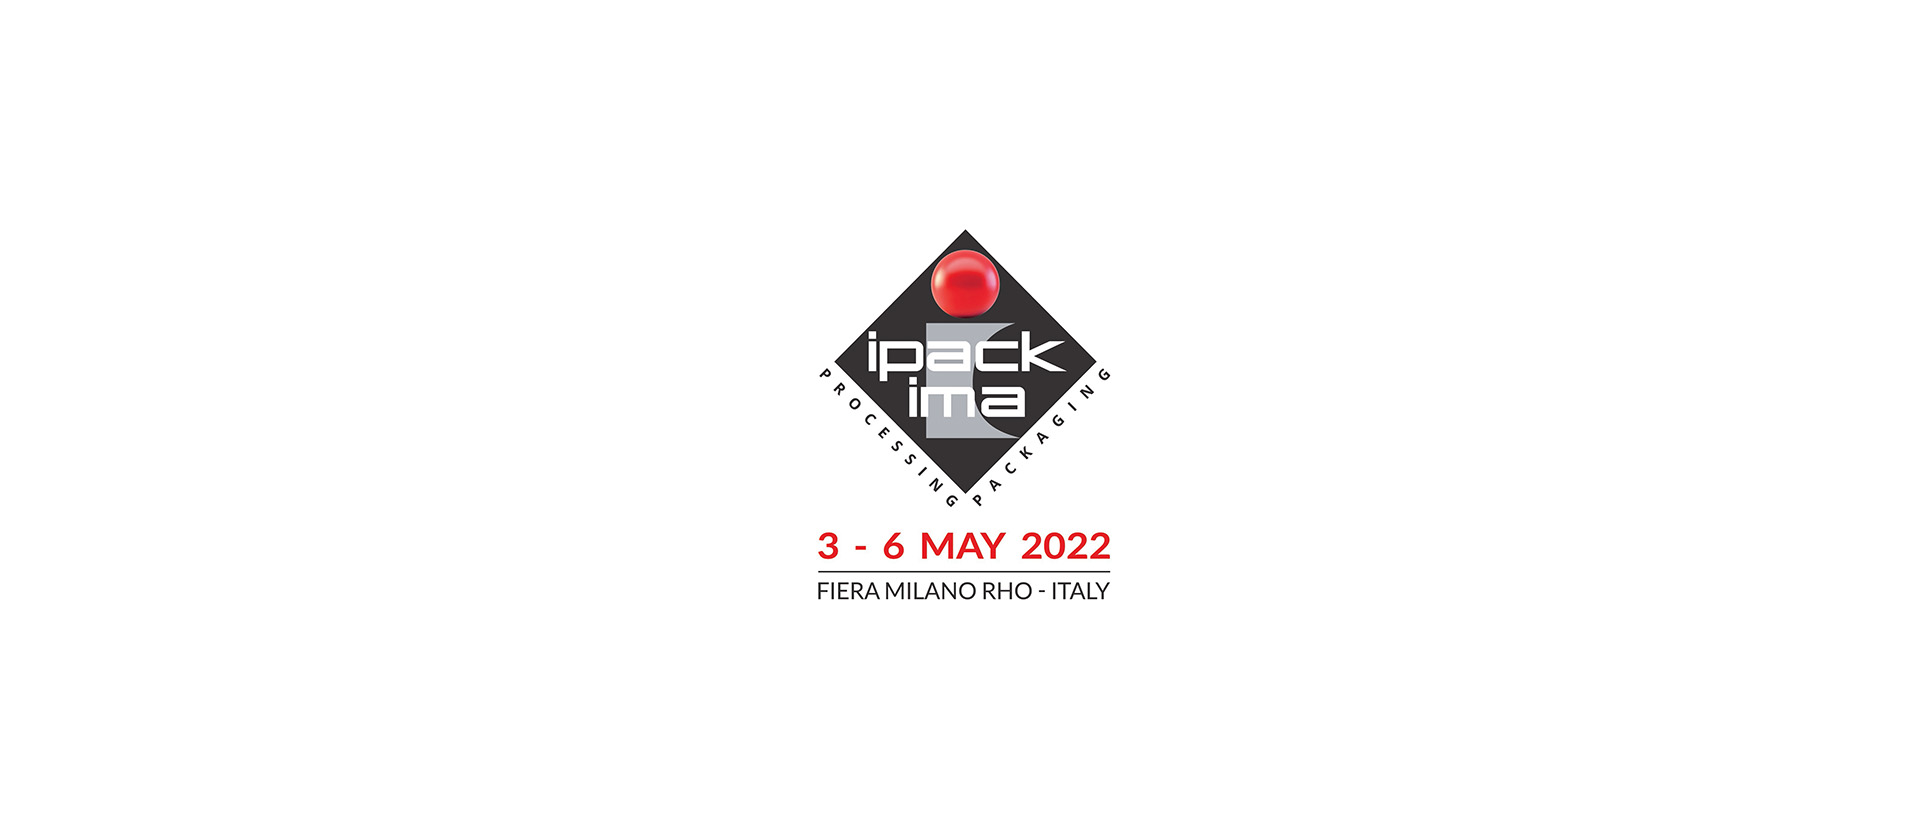 FlexLink 将参加 5 月 3 日至 6 日在米兰举办的 IPACK-IMA，期待您的到来